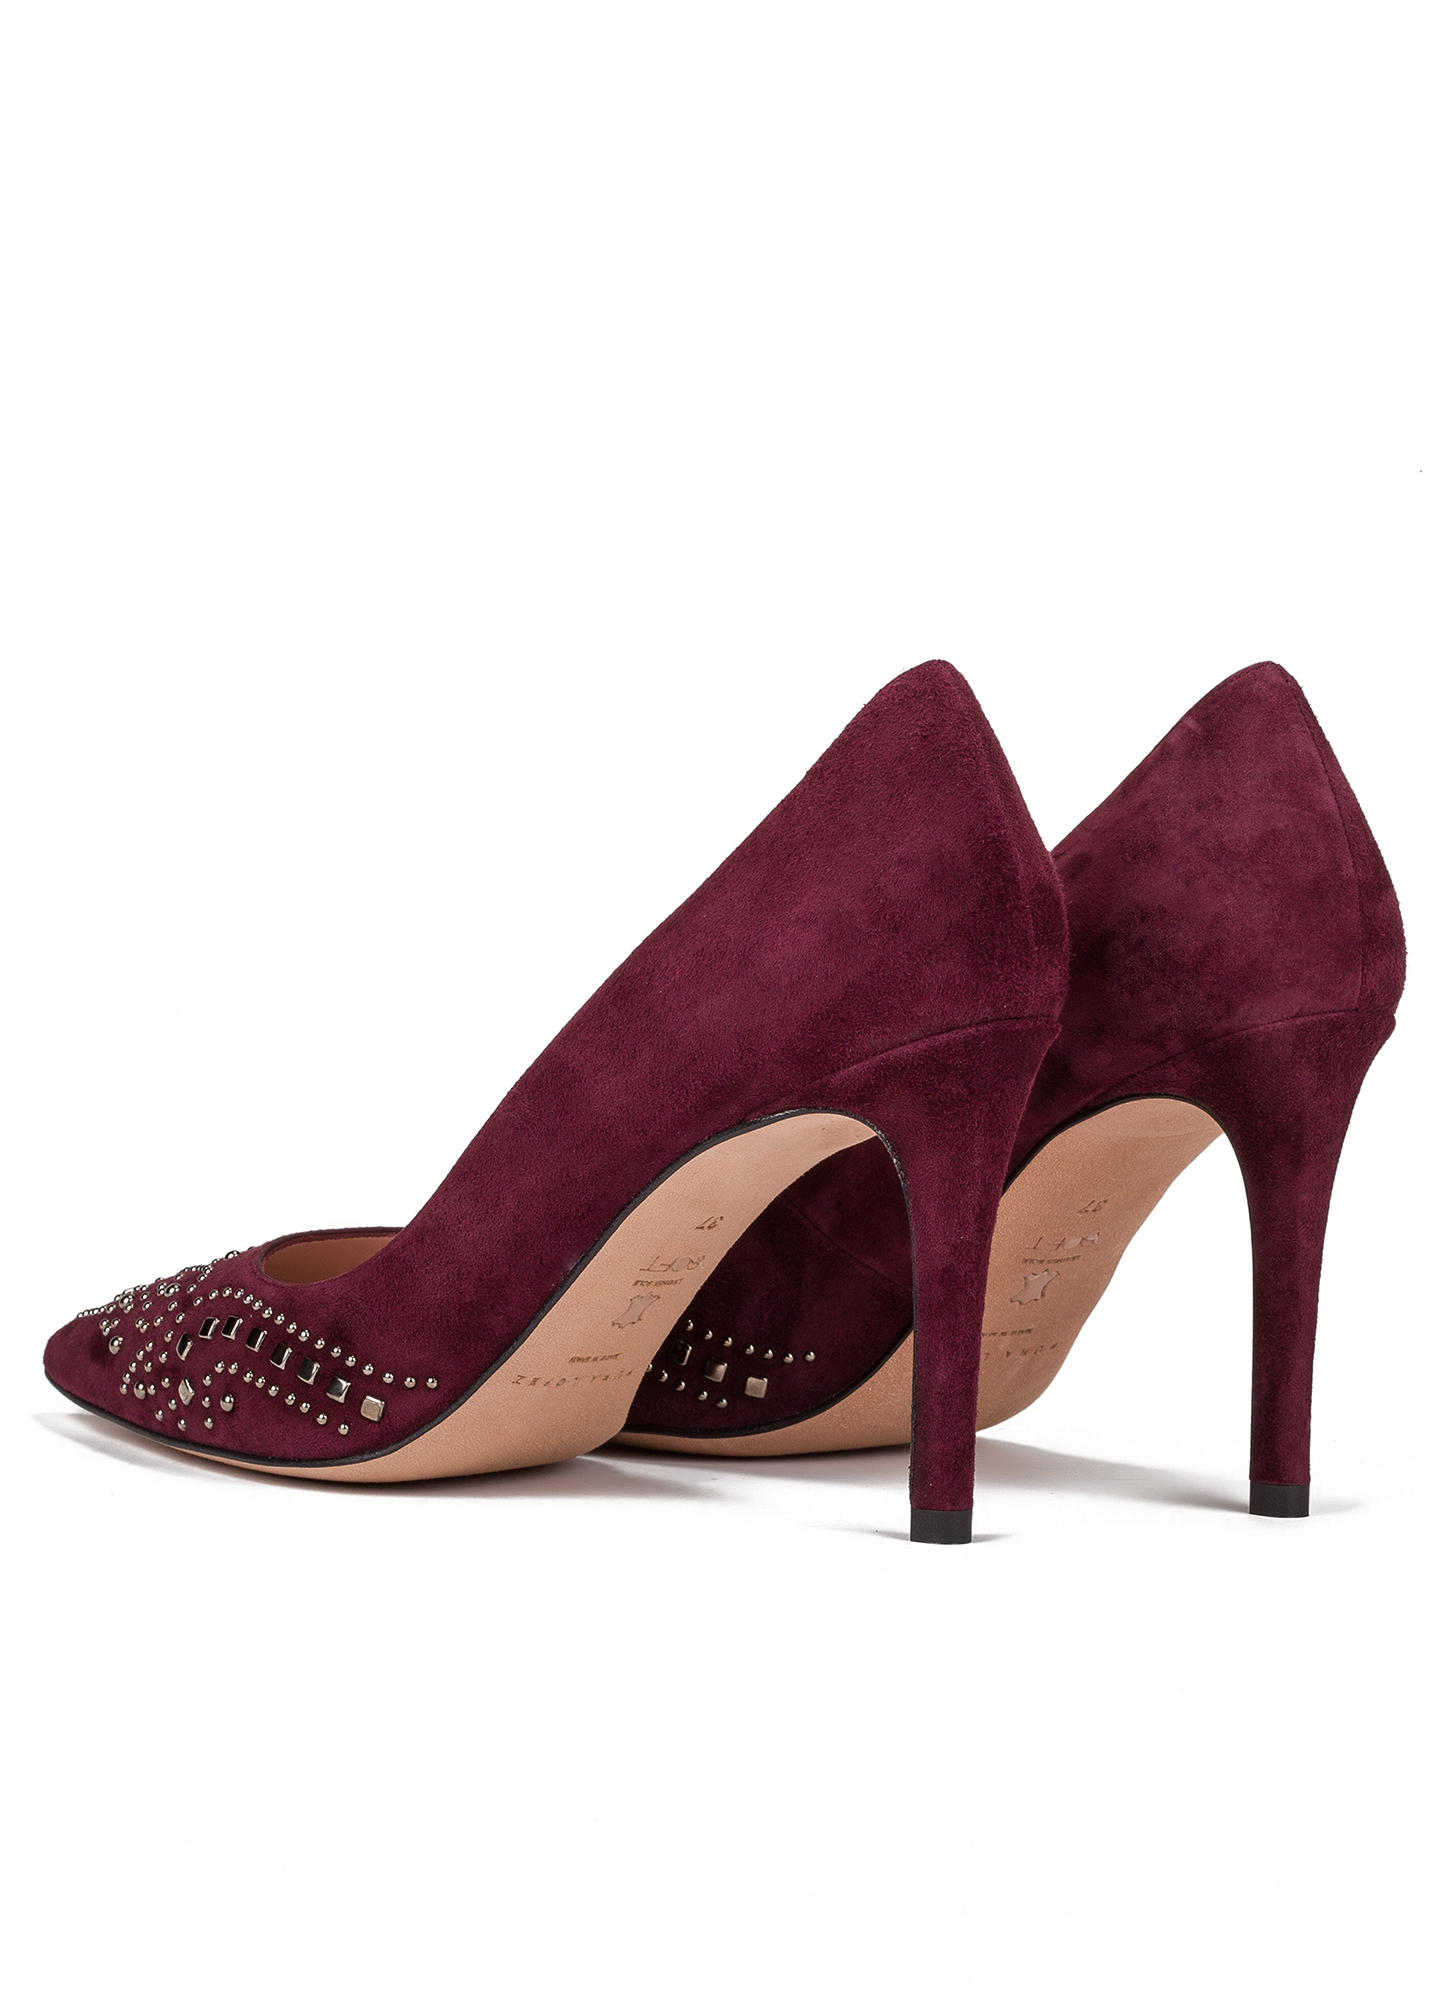 Studded high heel pumps in burgundy suede - online store Pura Lopez ...